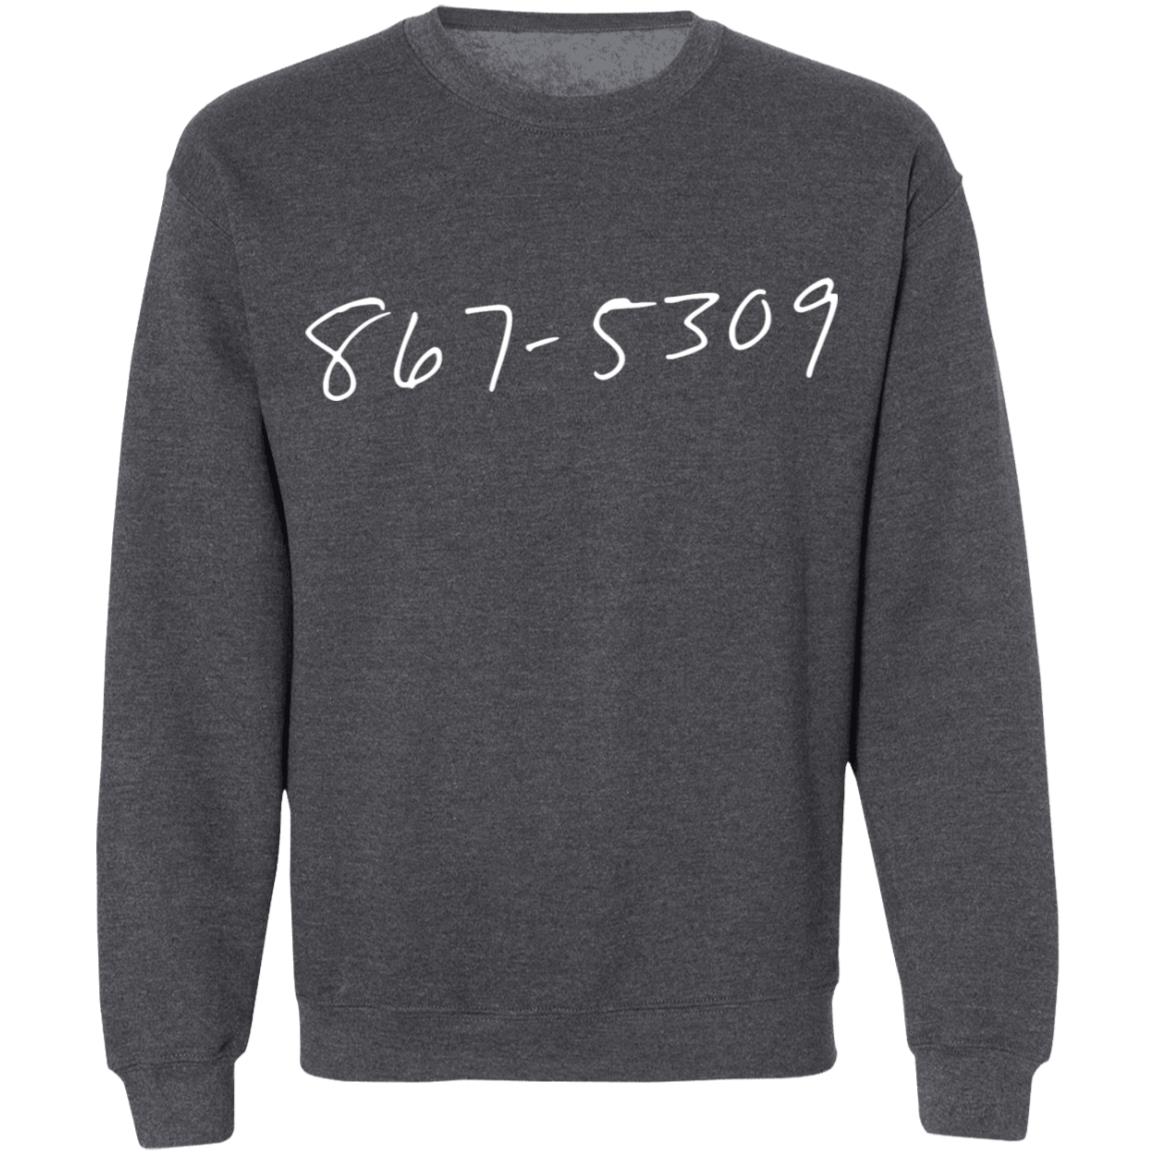 867-5309 Shirt, T-Shirt, Hoodie, Tank Top, Sweatshirt